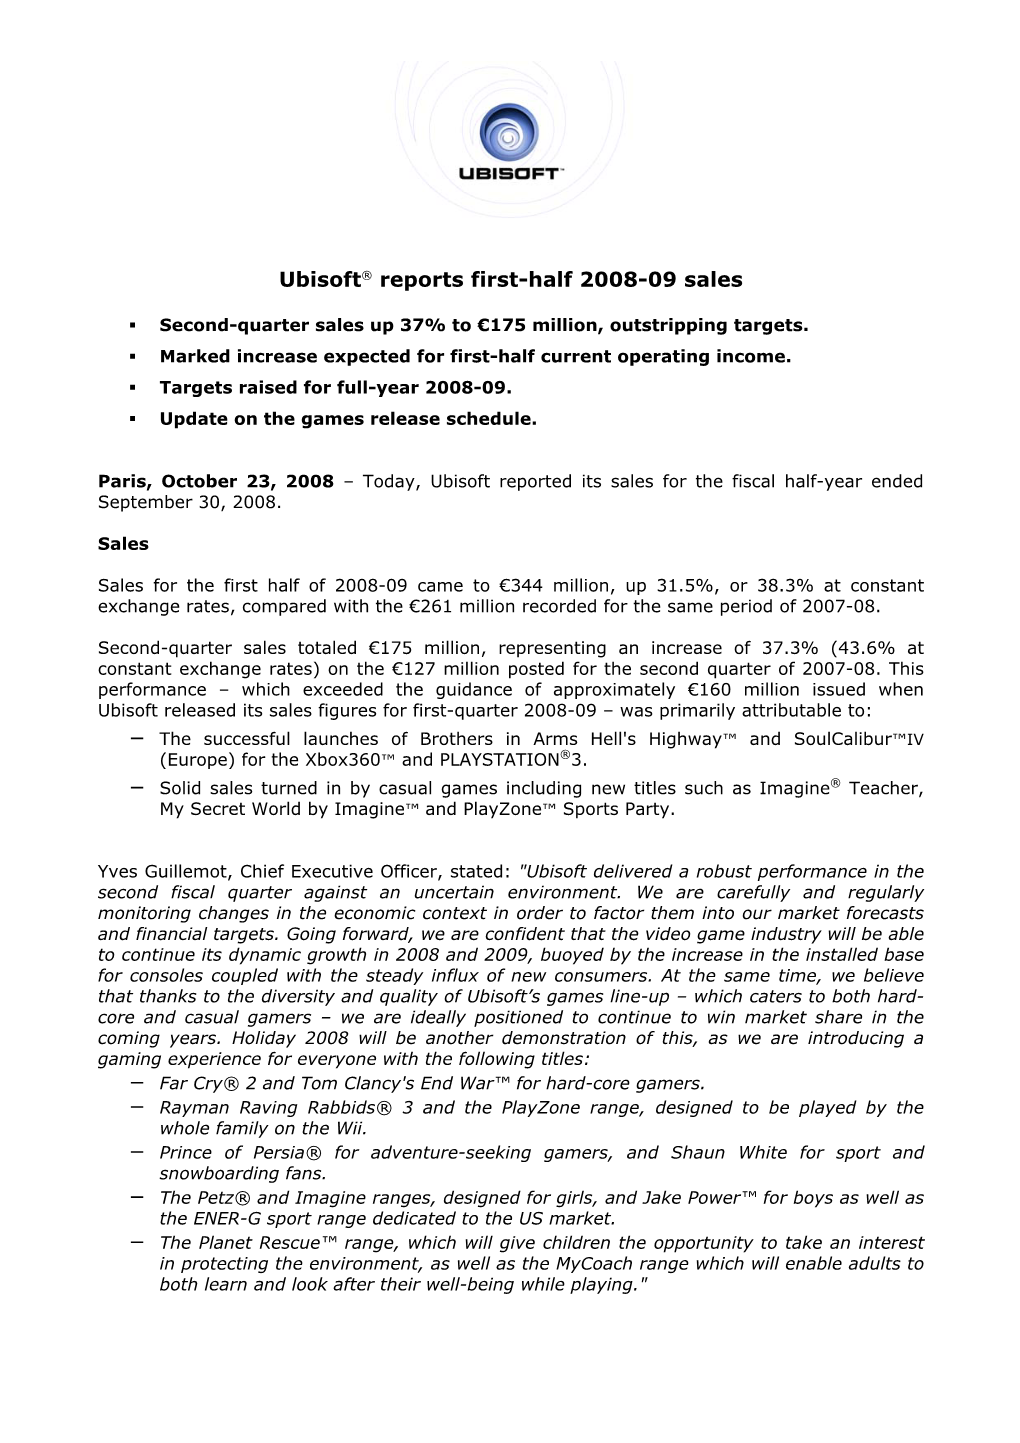 Ubisoft® Reports First-Half 2008-09 Sales